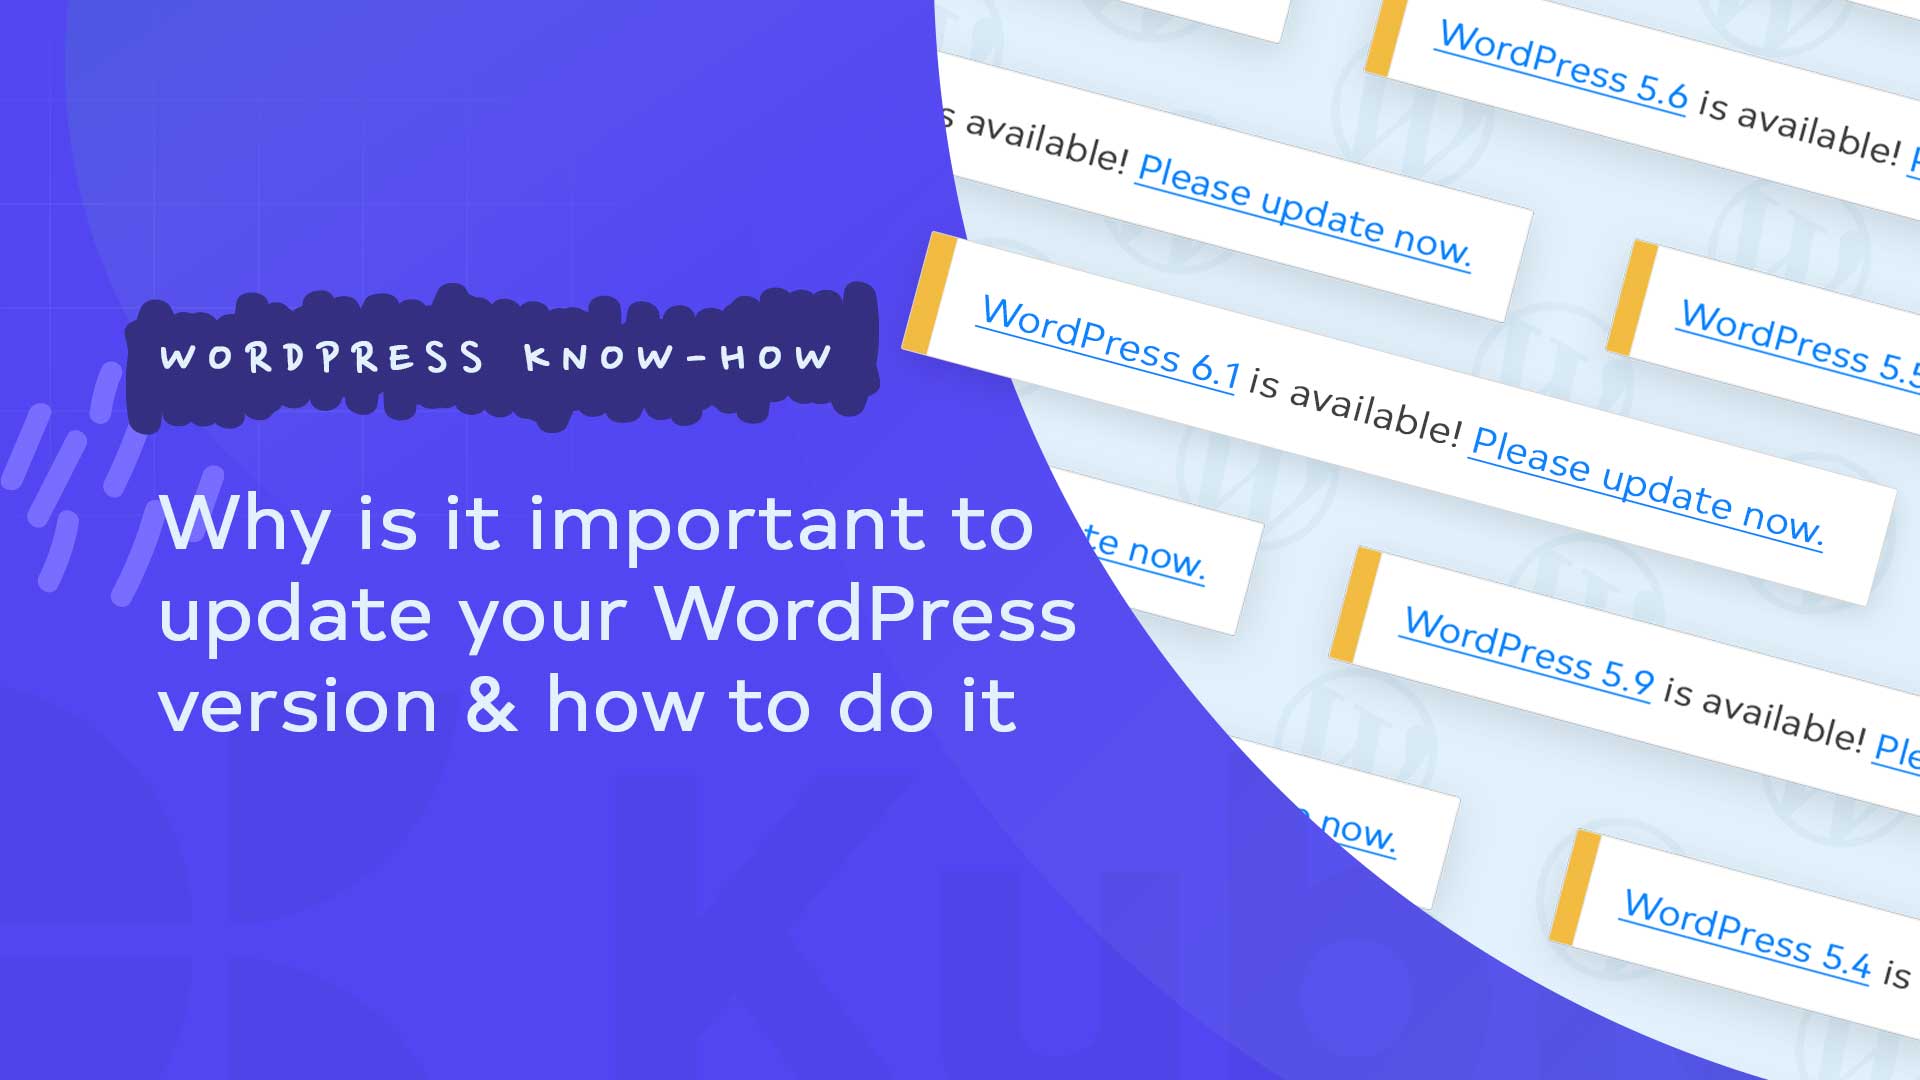 All about WordPress updates